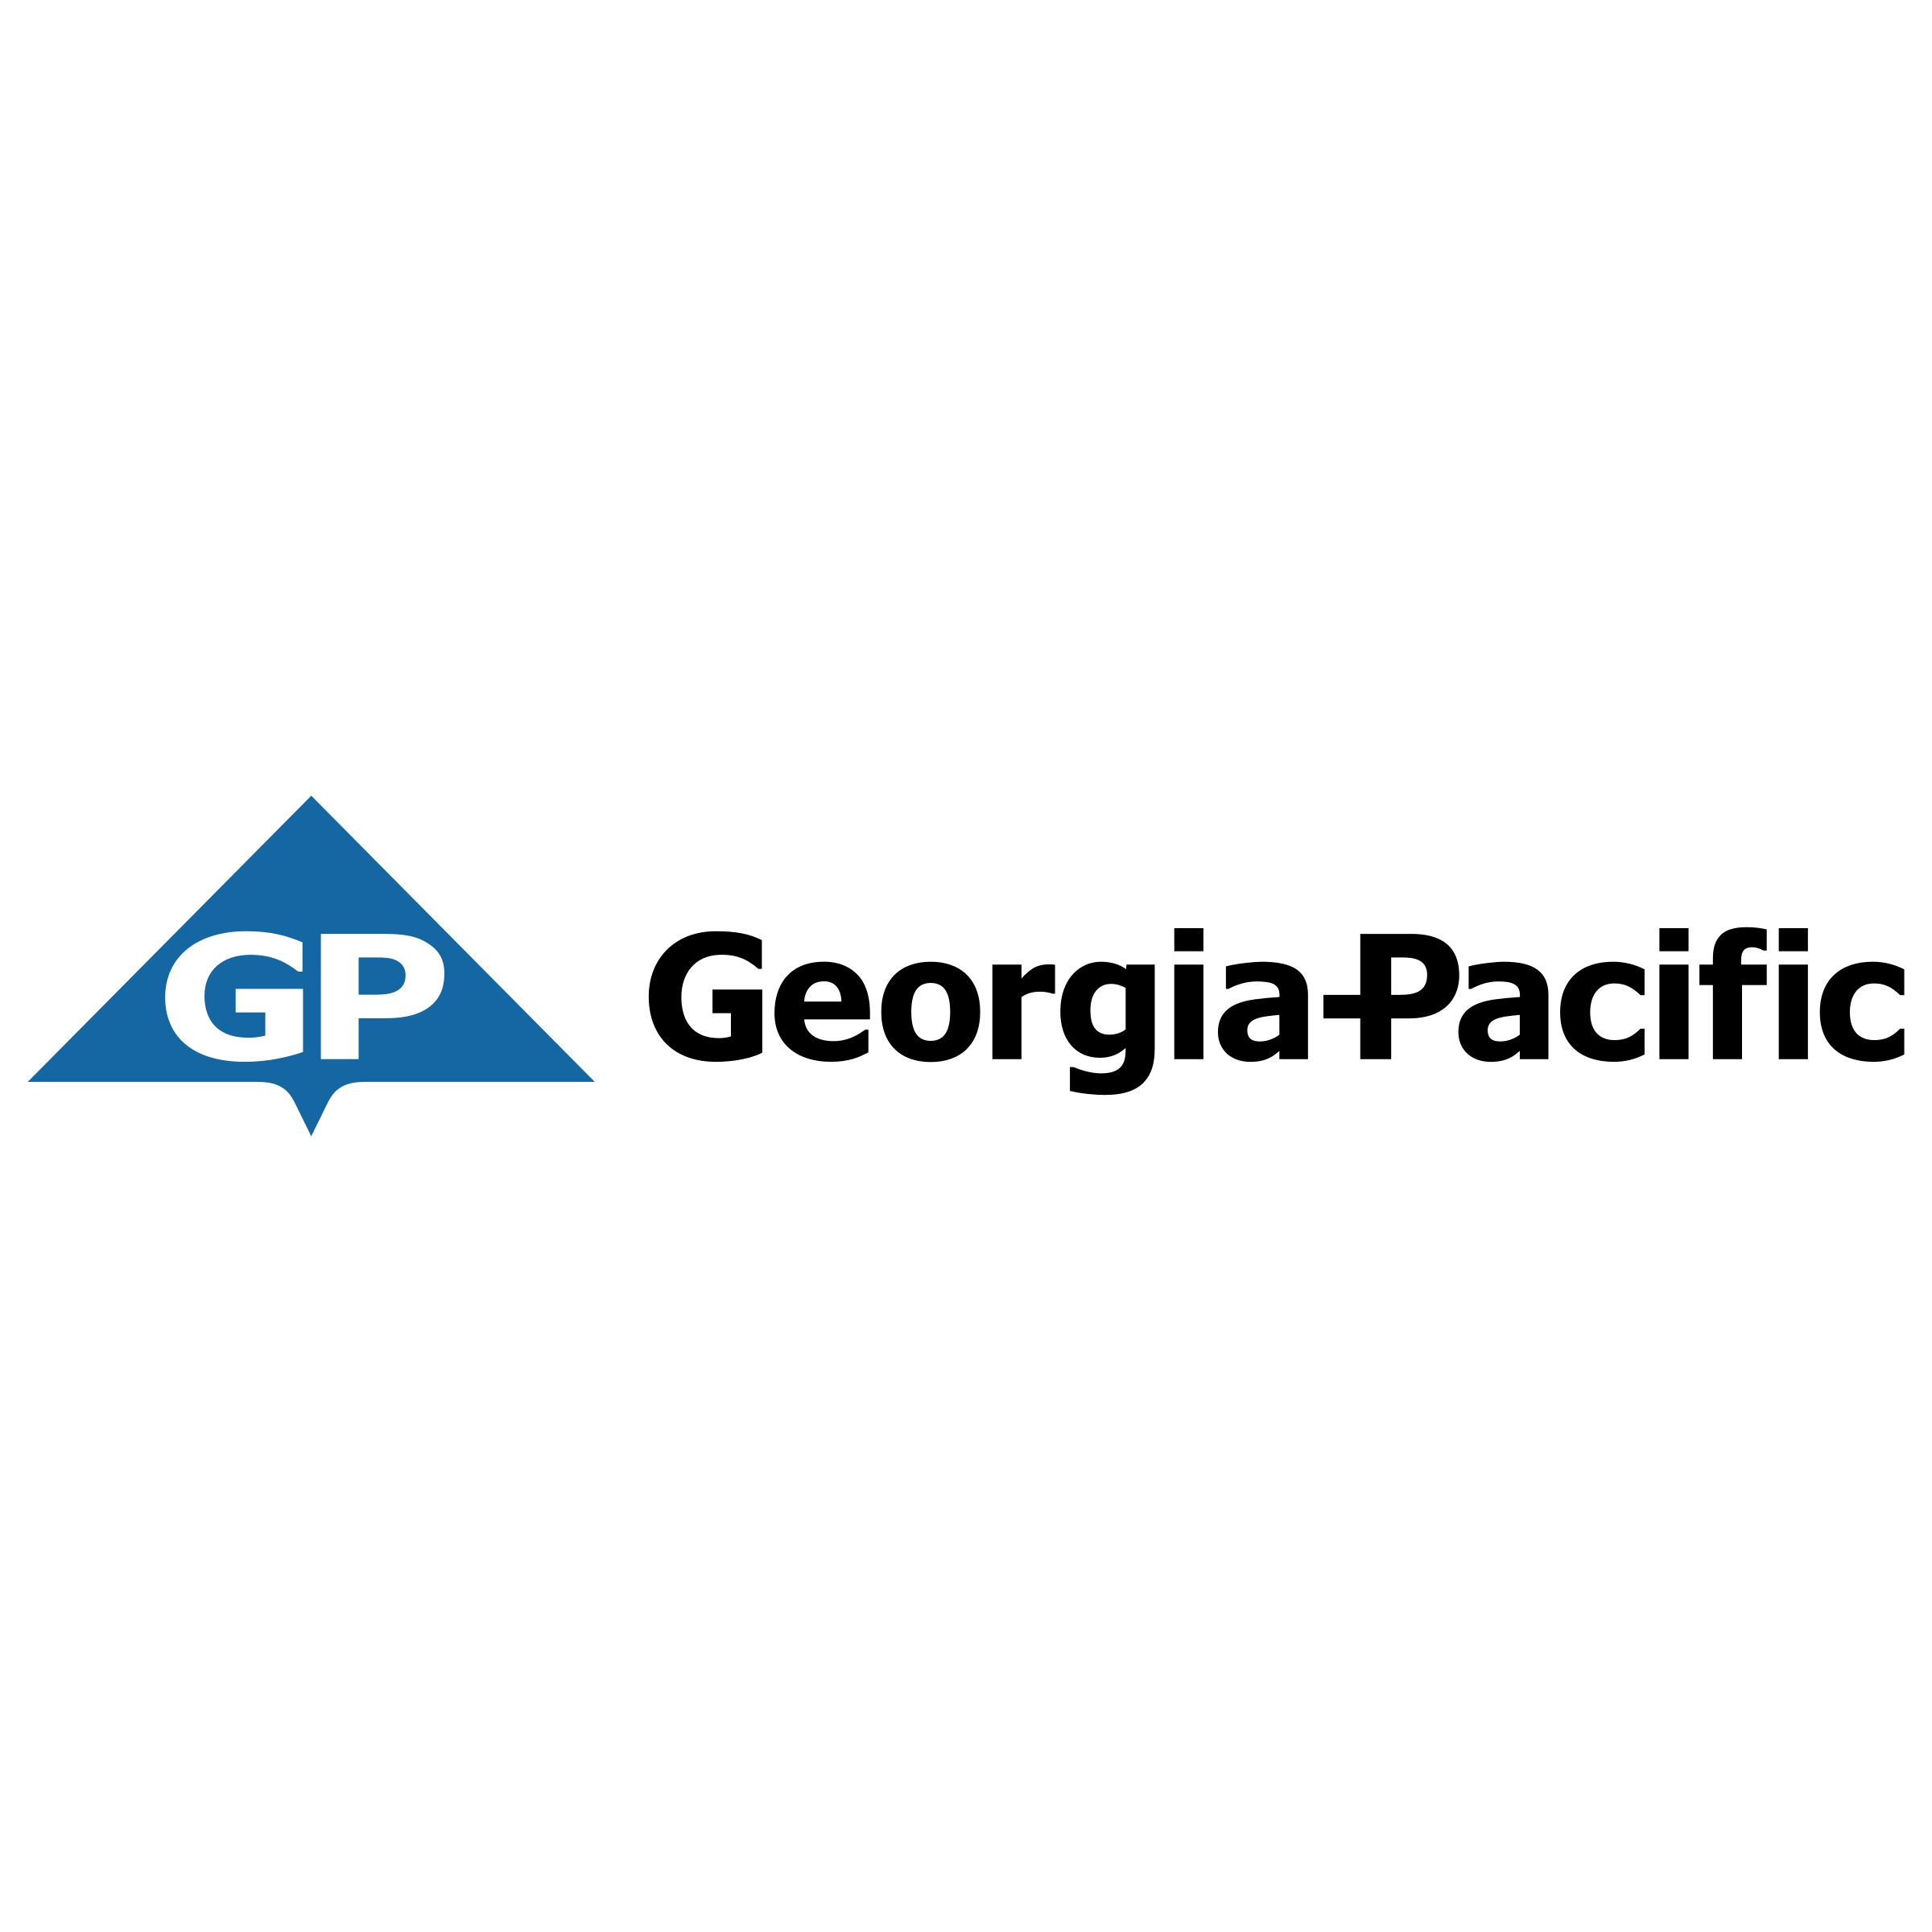 georgia-pacific-logo-png-transparent